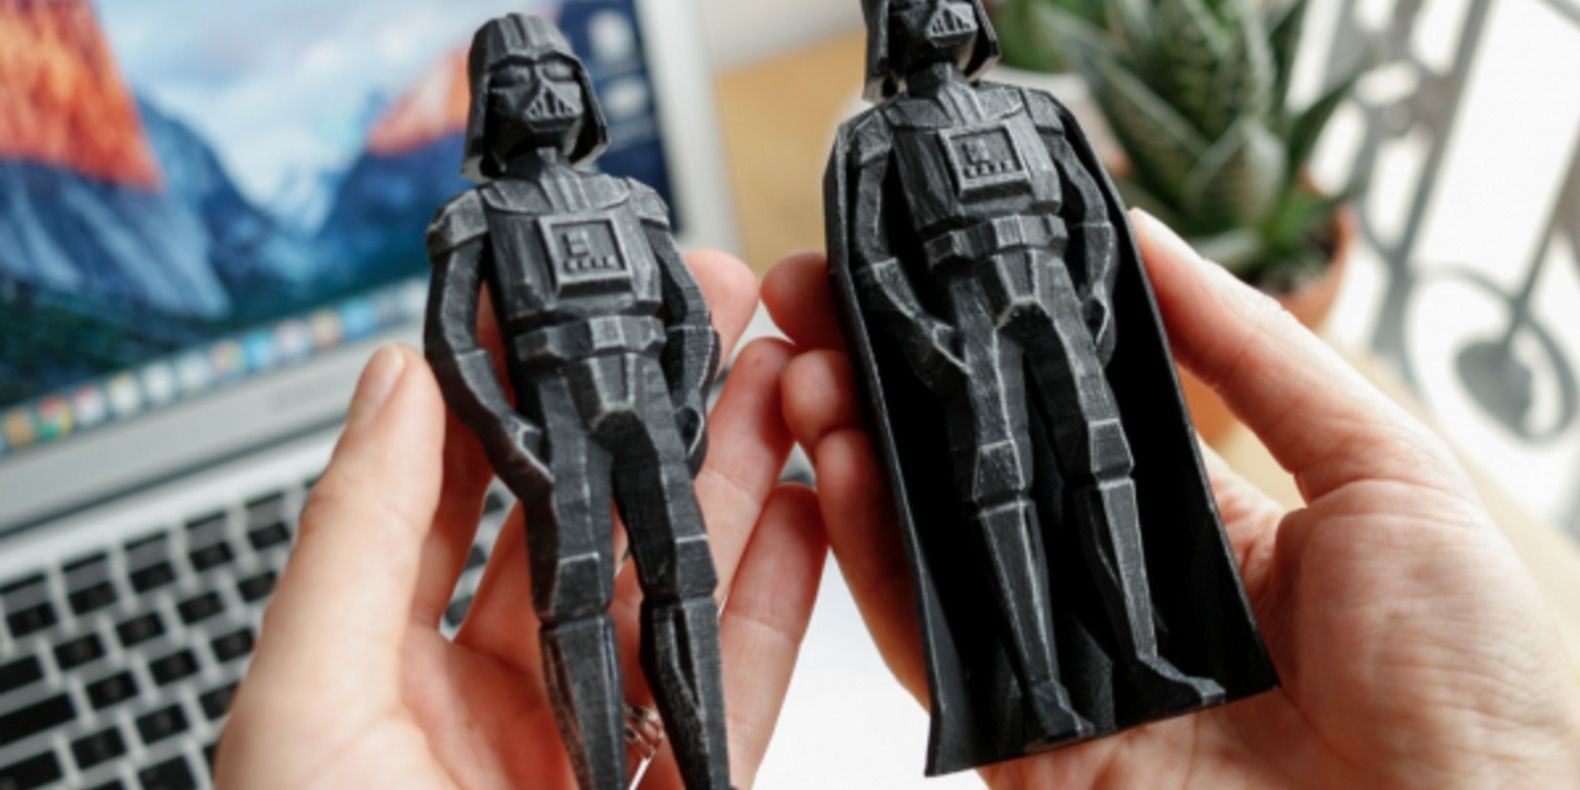 darth vader dark vador star wars stormtrooper 3D printer imprission 3D imprimante 3D low poly agustin flowalistik cults fichier 3D STL 3